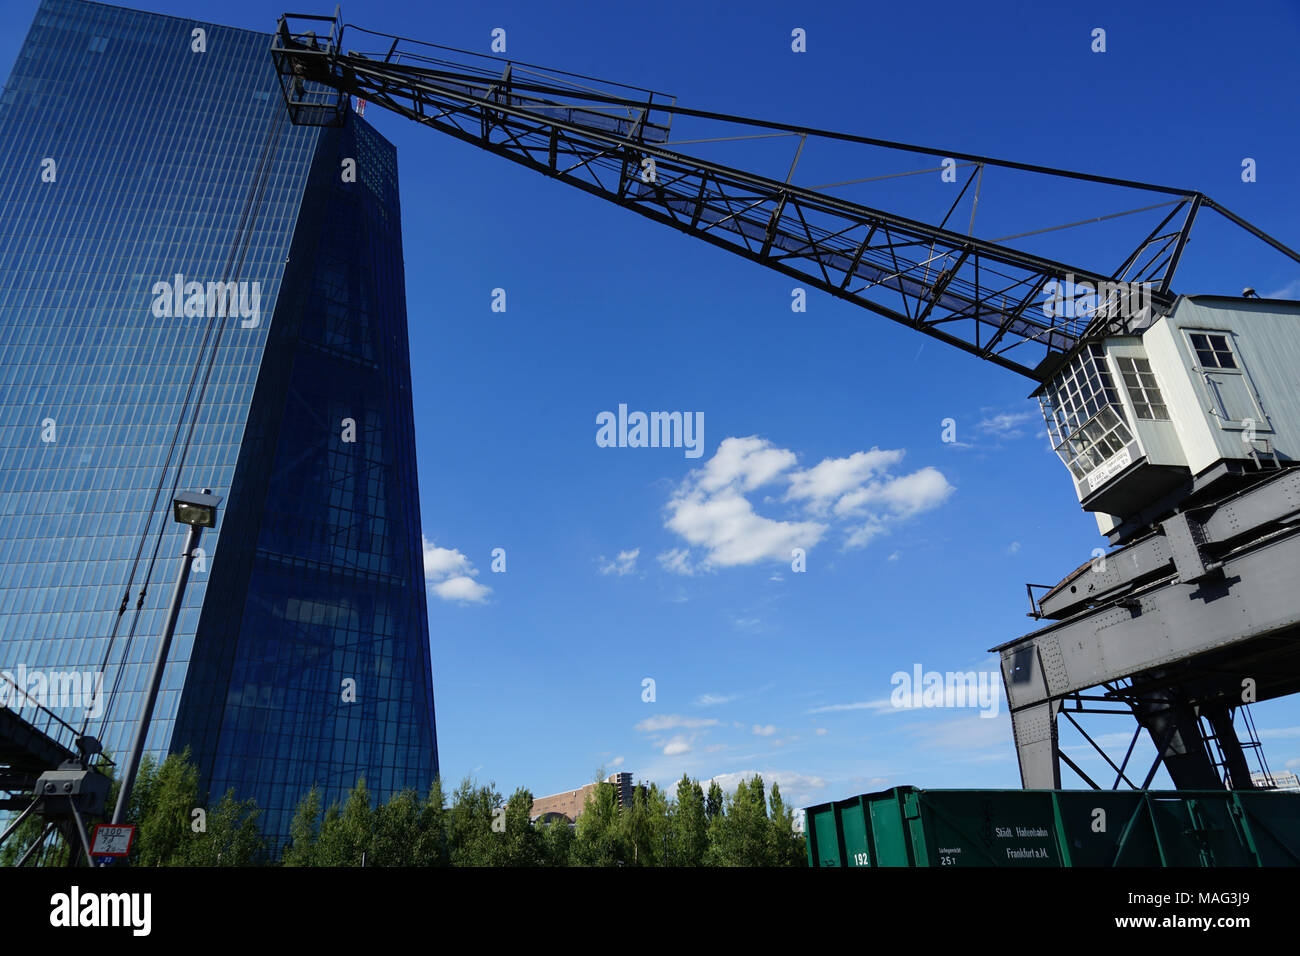 Banca centrale europea, Weseler Werft con elencati gru portuali, Francoforte, Germania, Foto Stock